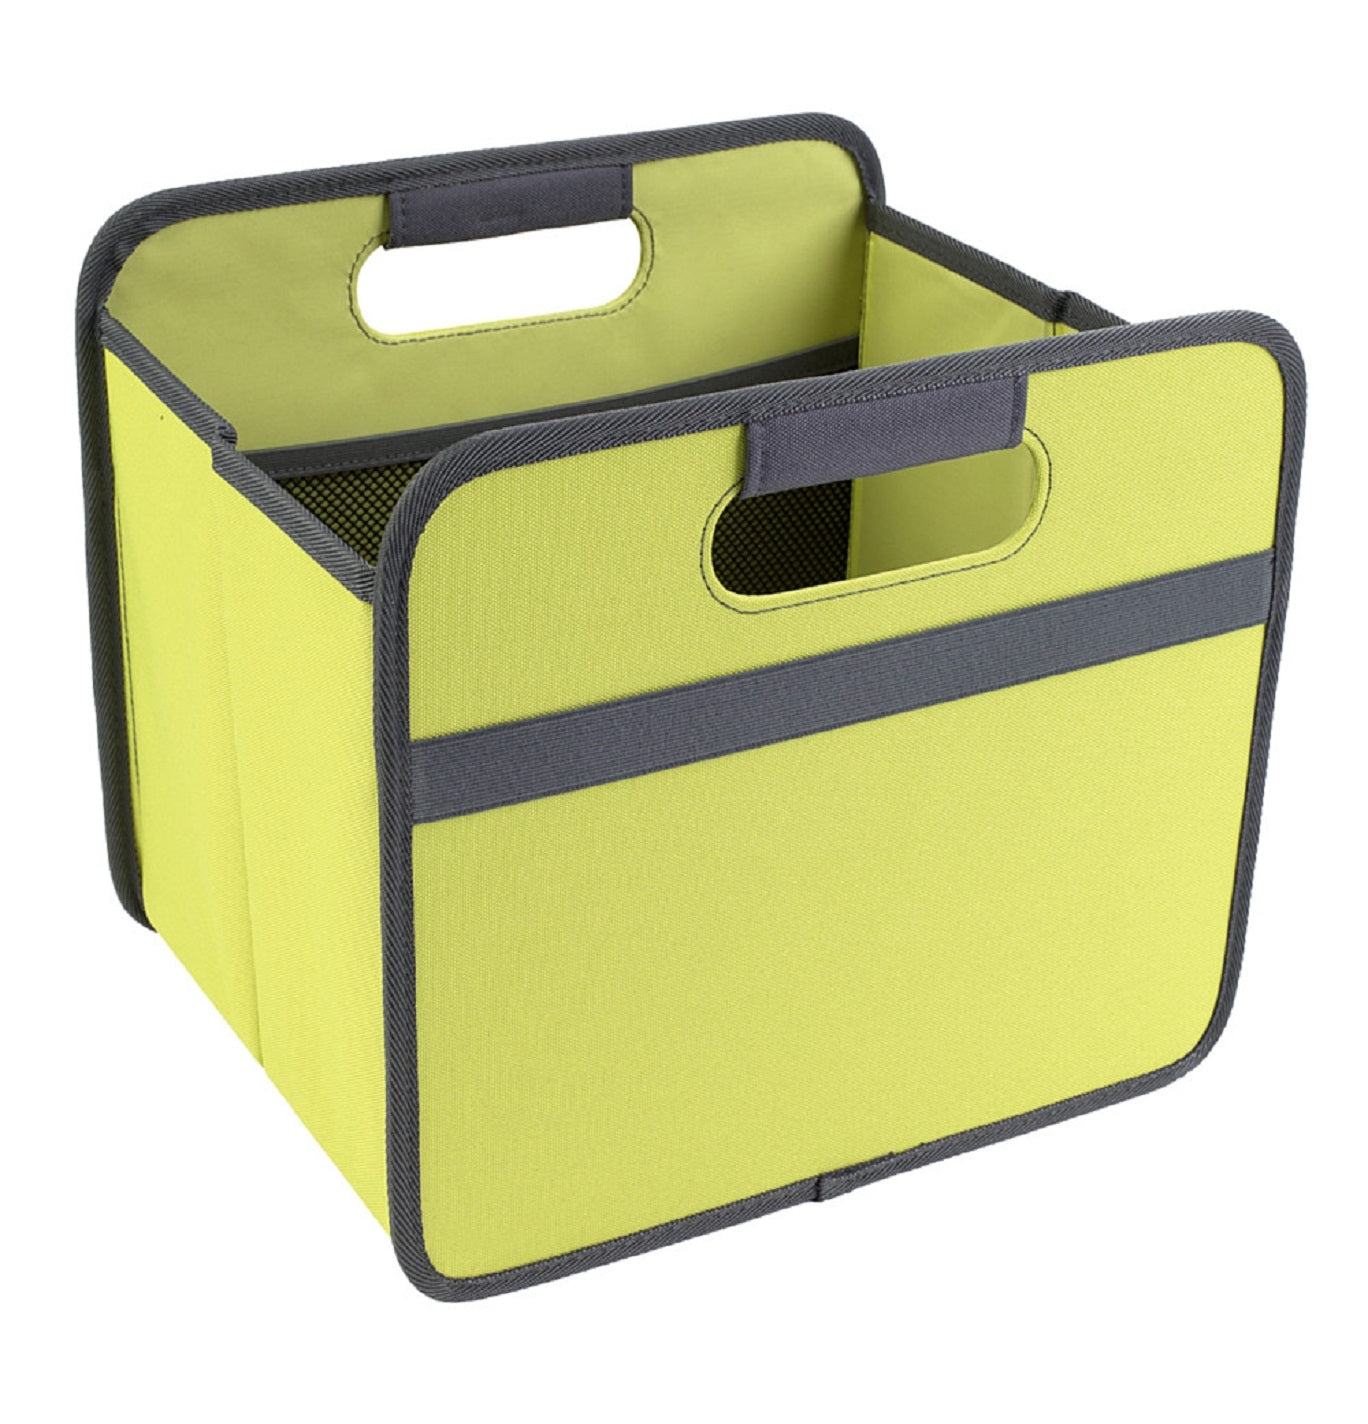 Meori® 15L Green Folding Box & 6 Bottle Holder Set Image